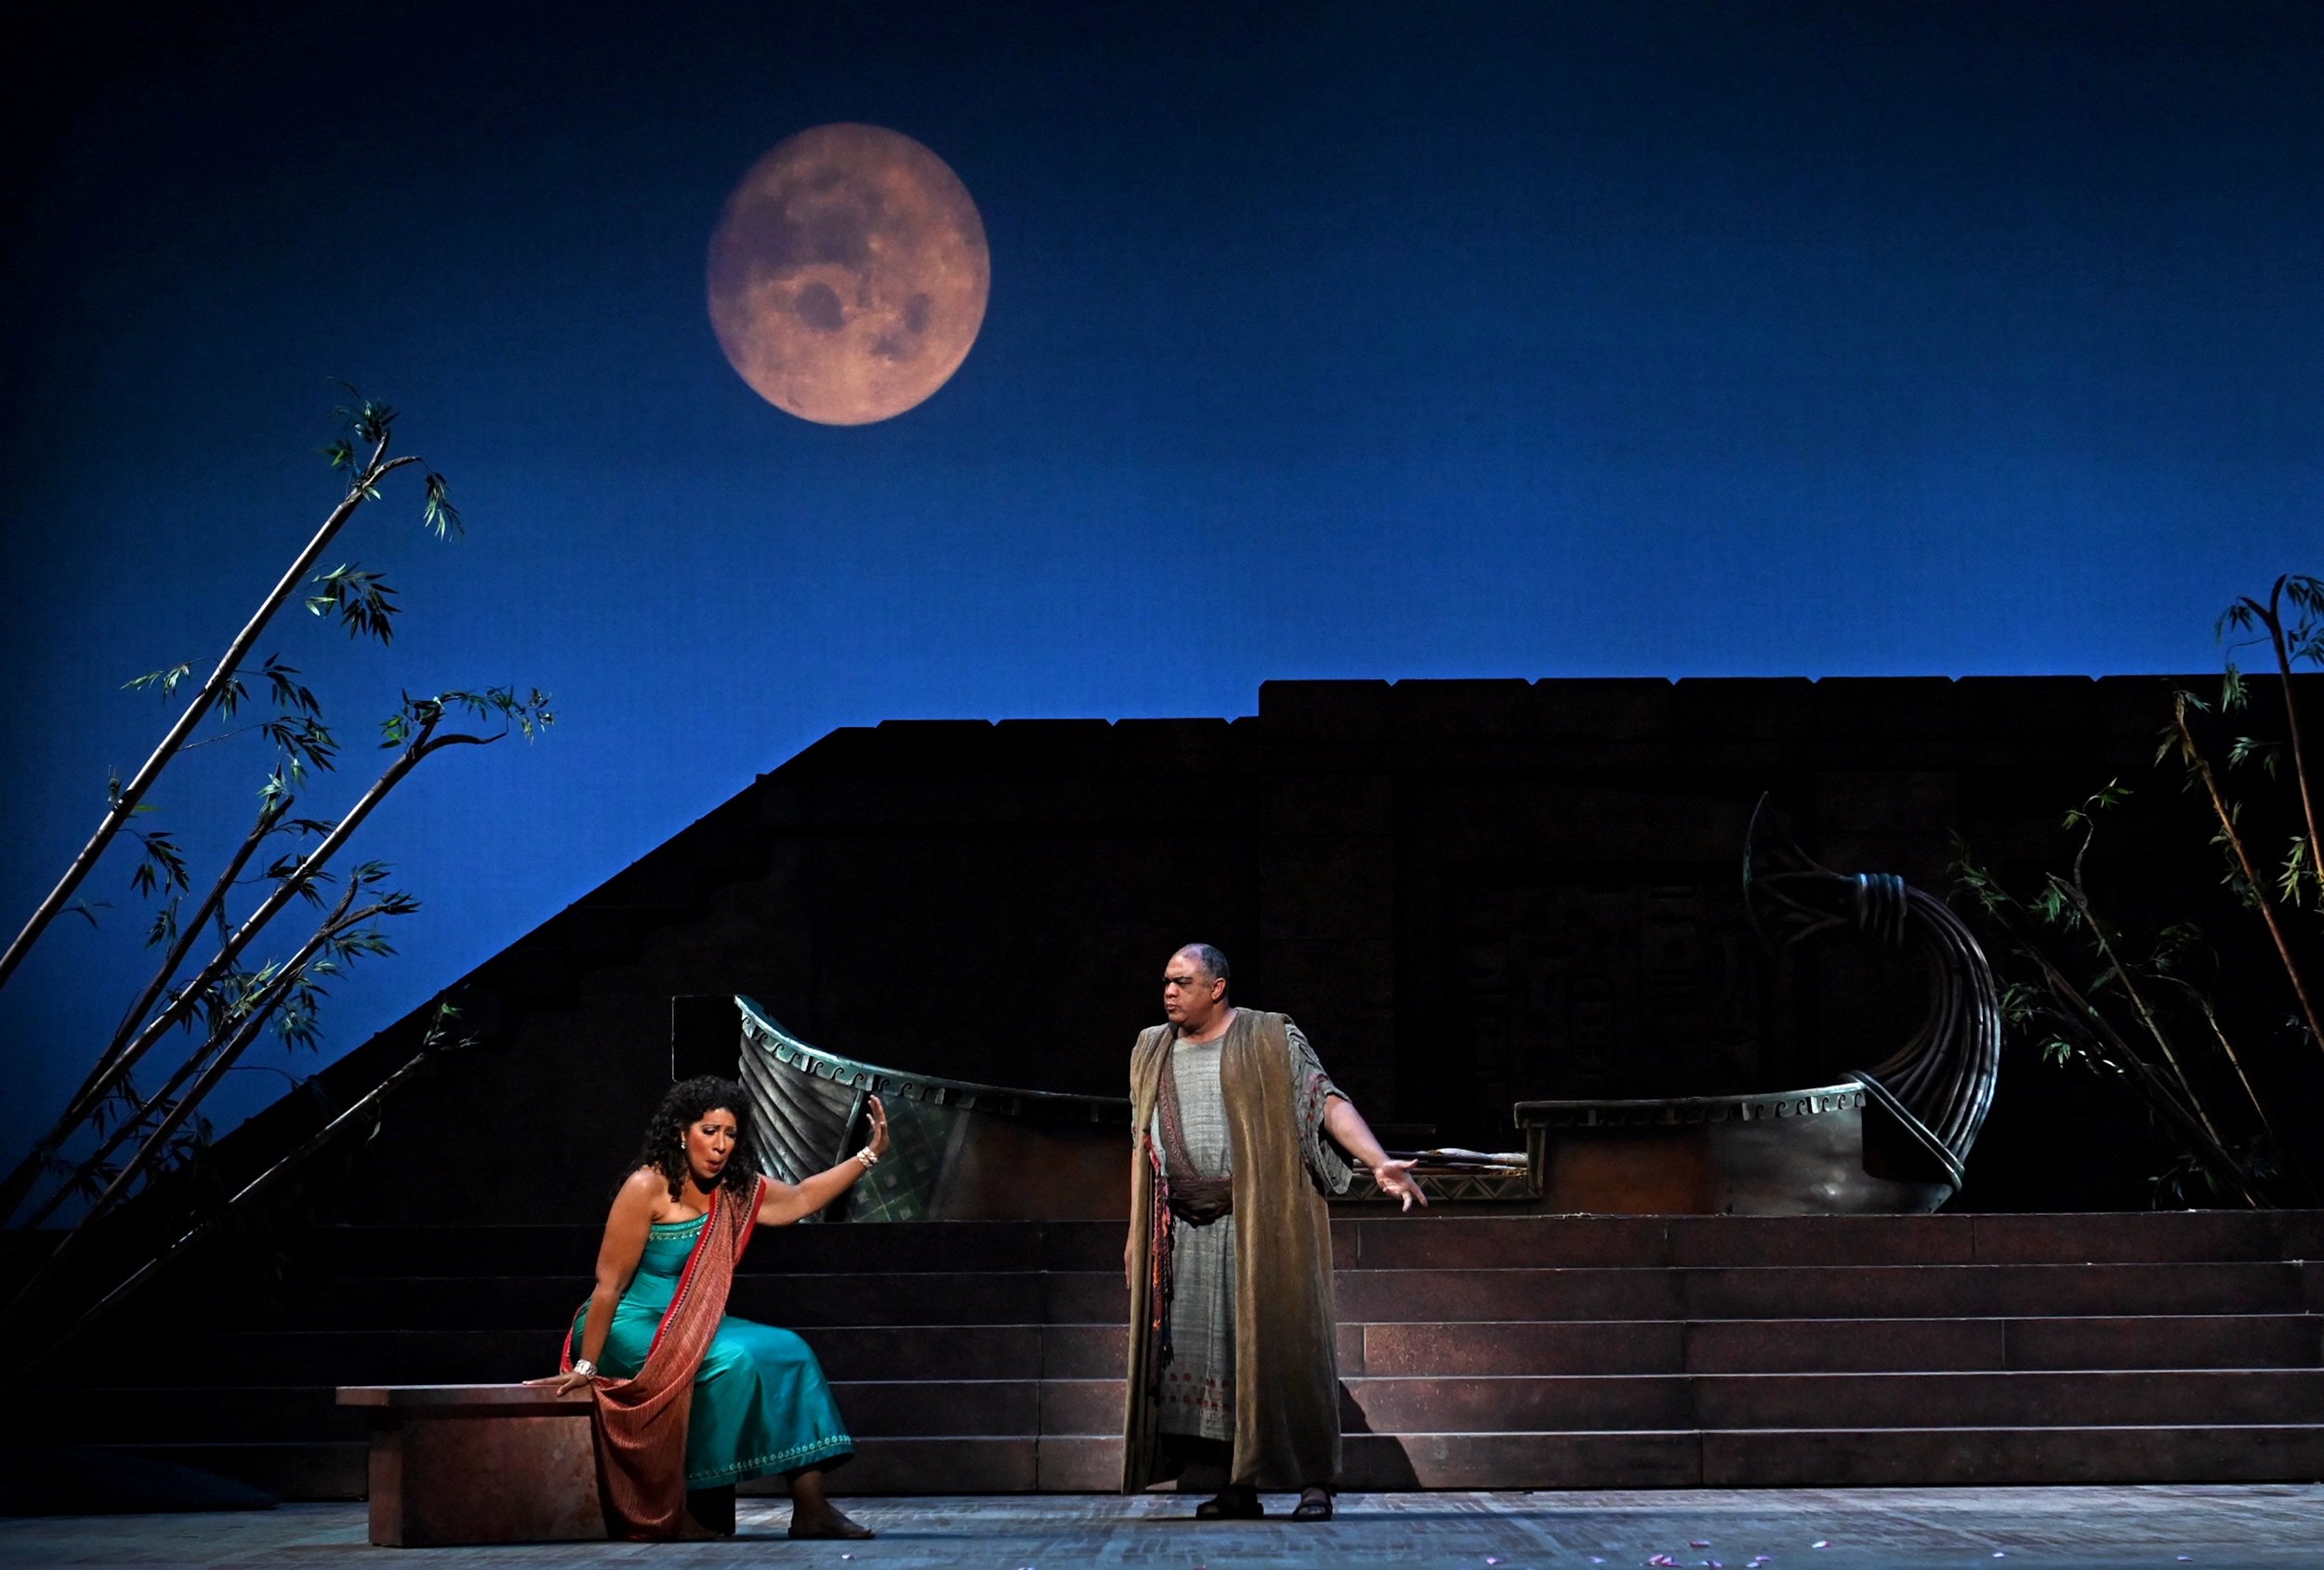  Mary Elizabeth Williams as Aida, Gordon Hawkins as Amonasro. Photo by Philip Groshong. 